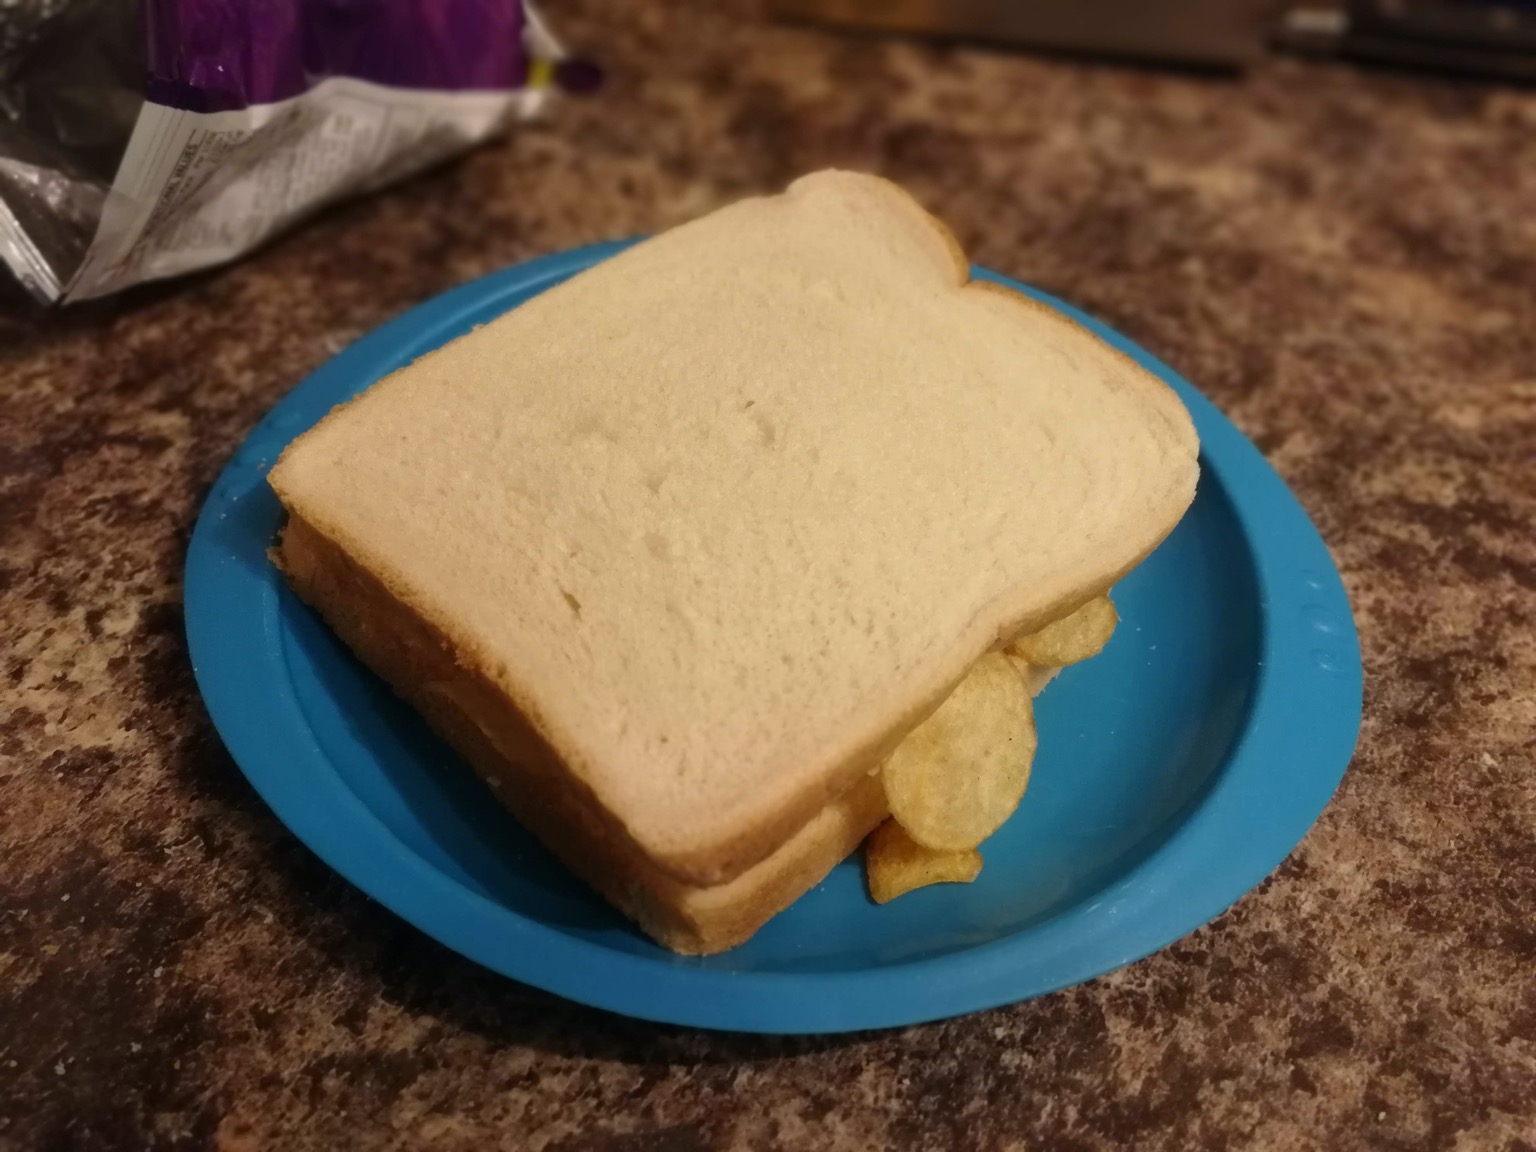 Crisp-filled white sandwich on a plastic plate